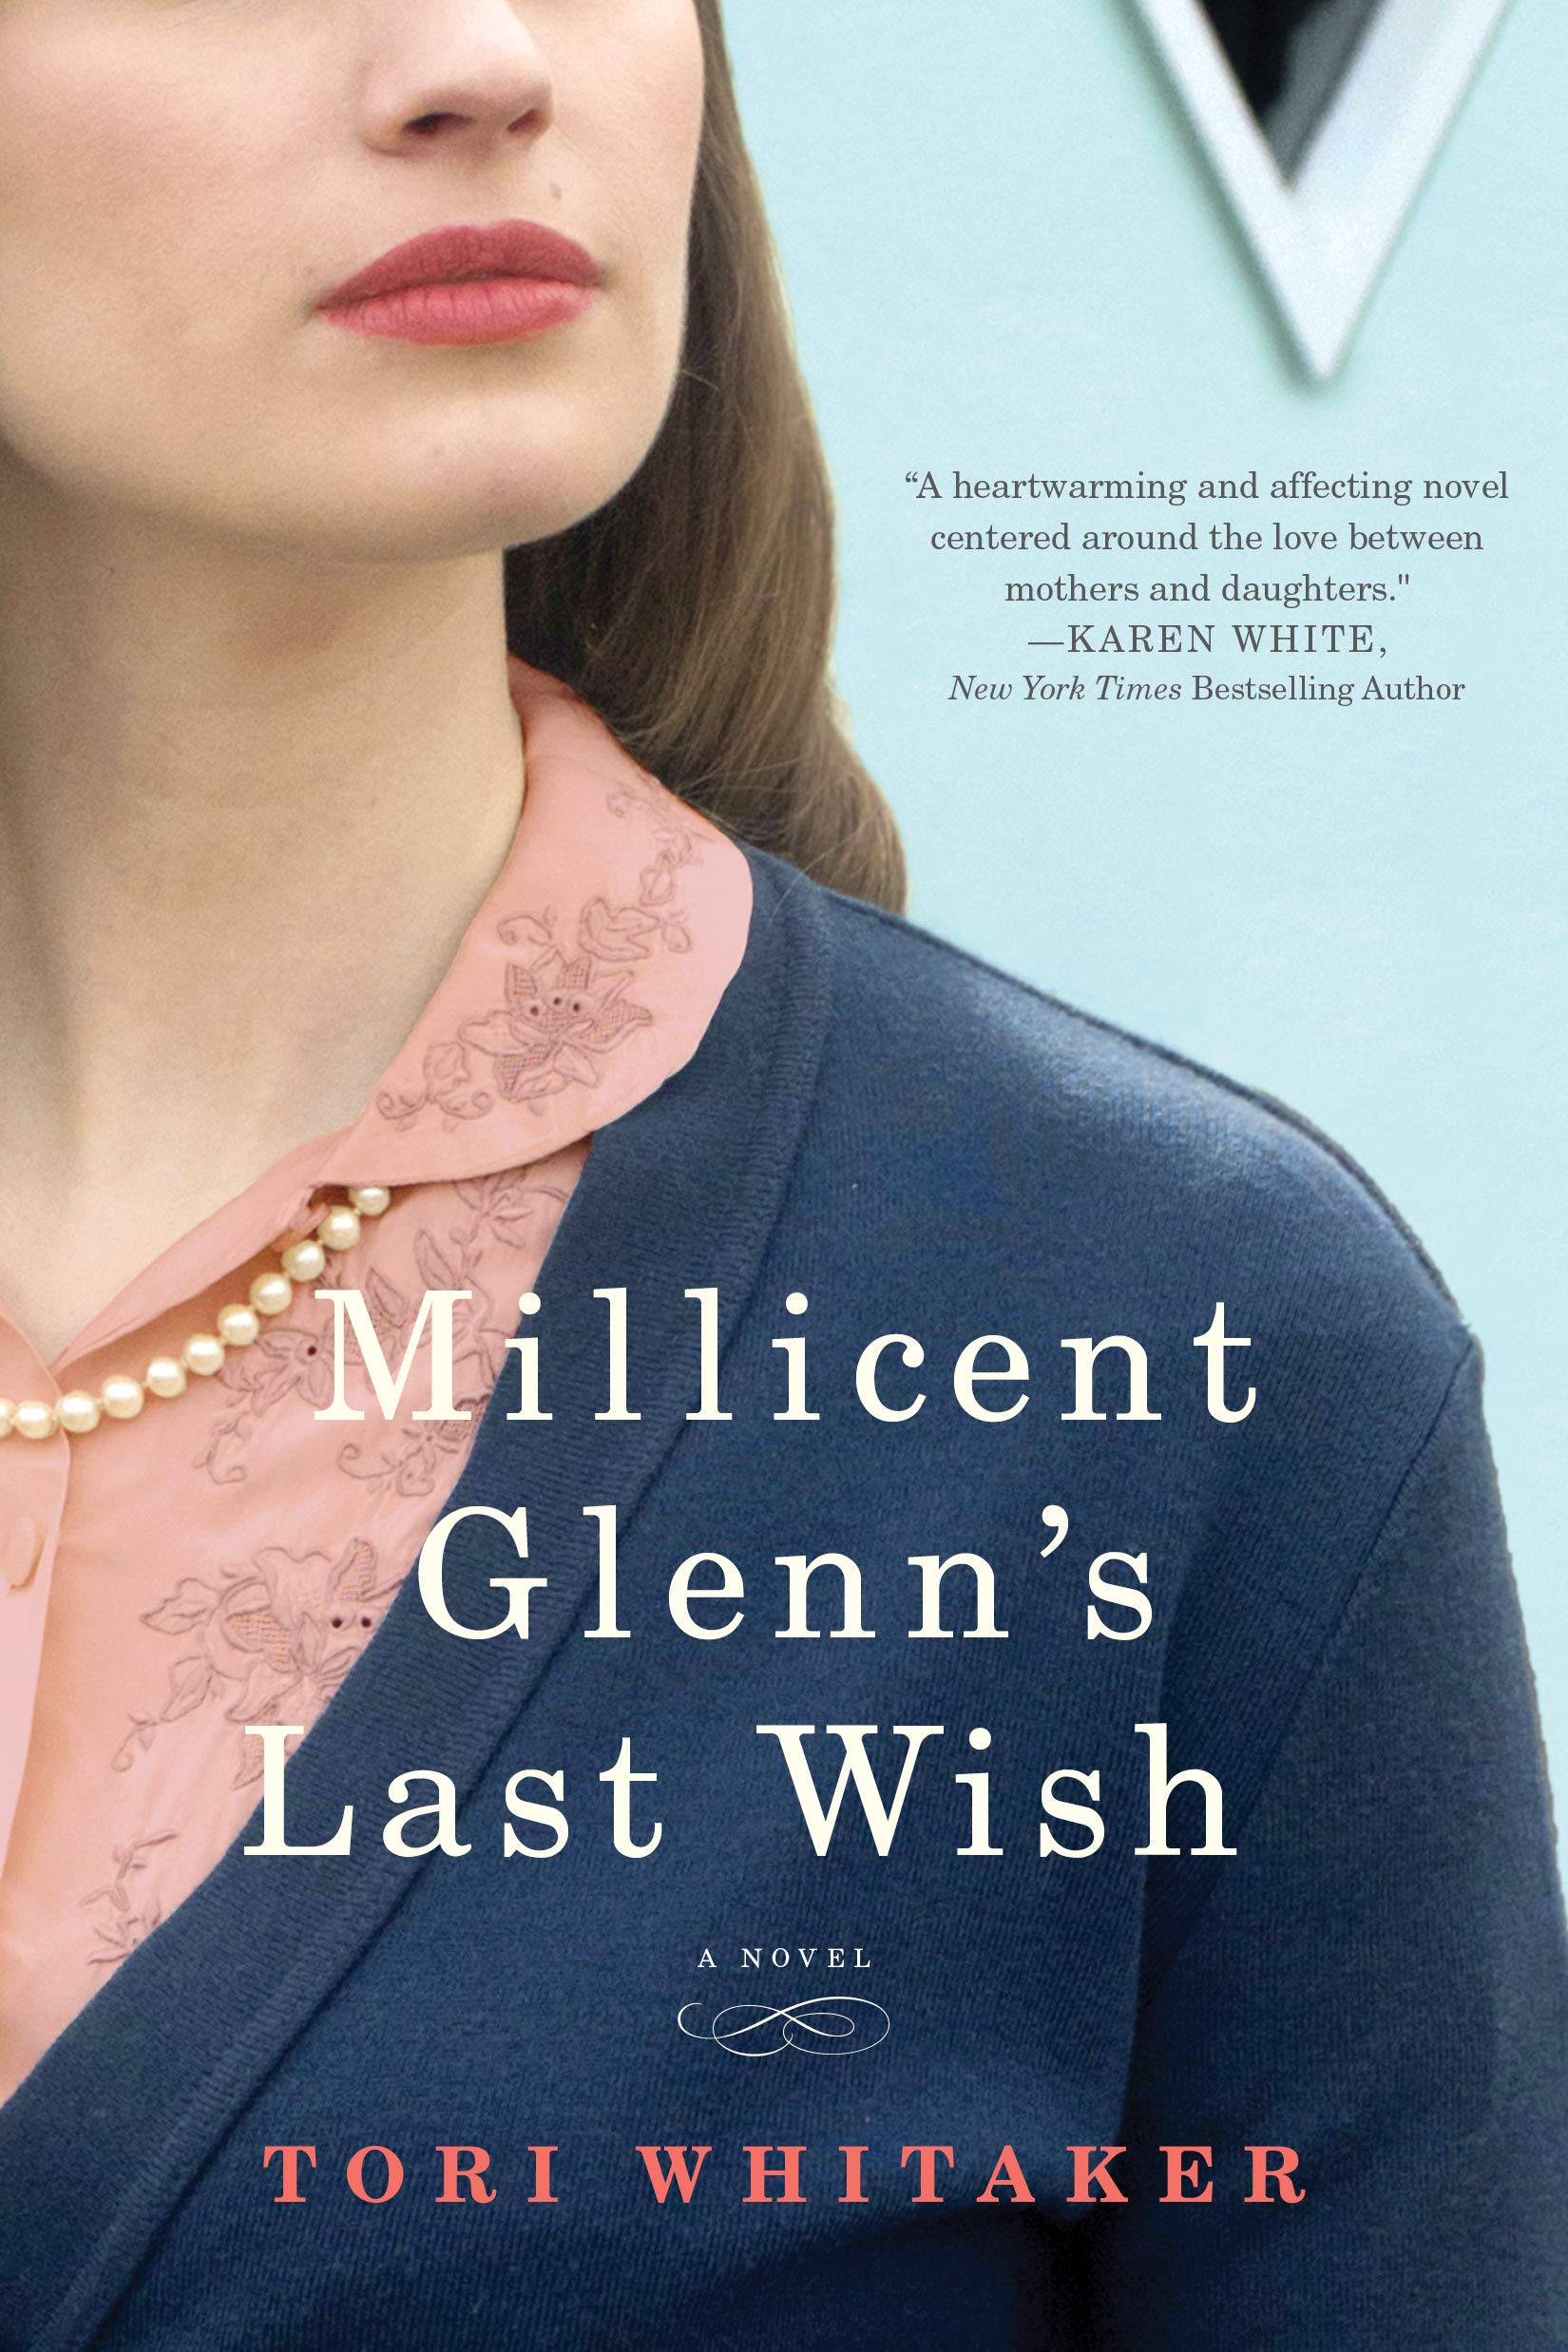 Millicent Glenn's Last Wish By Tori Whitaker